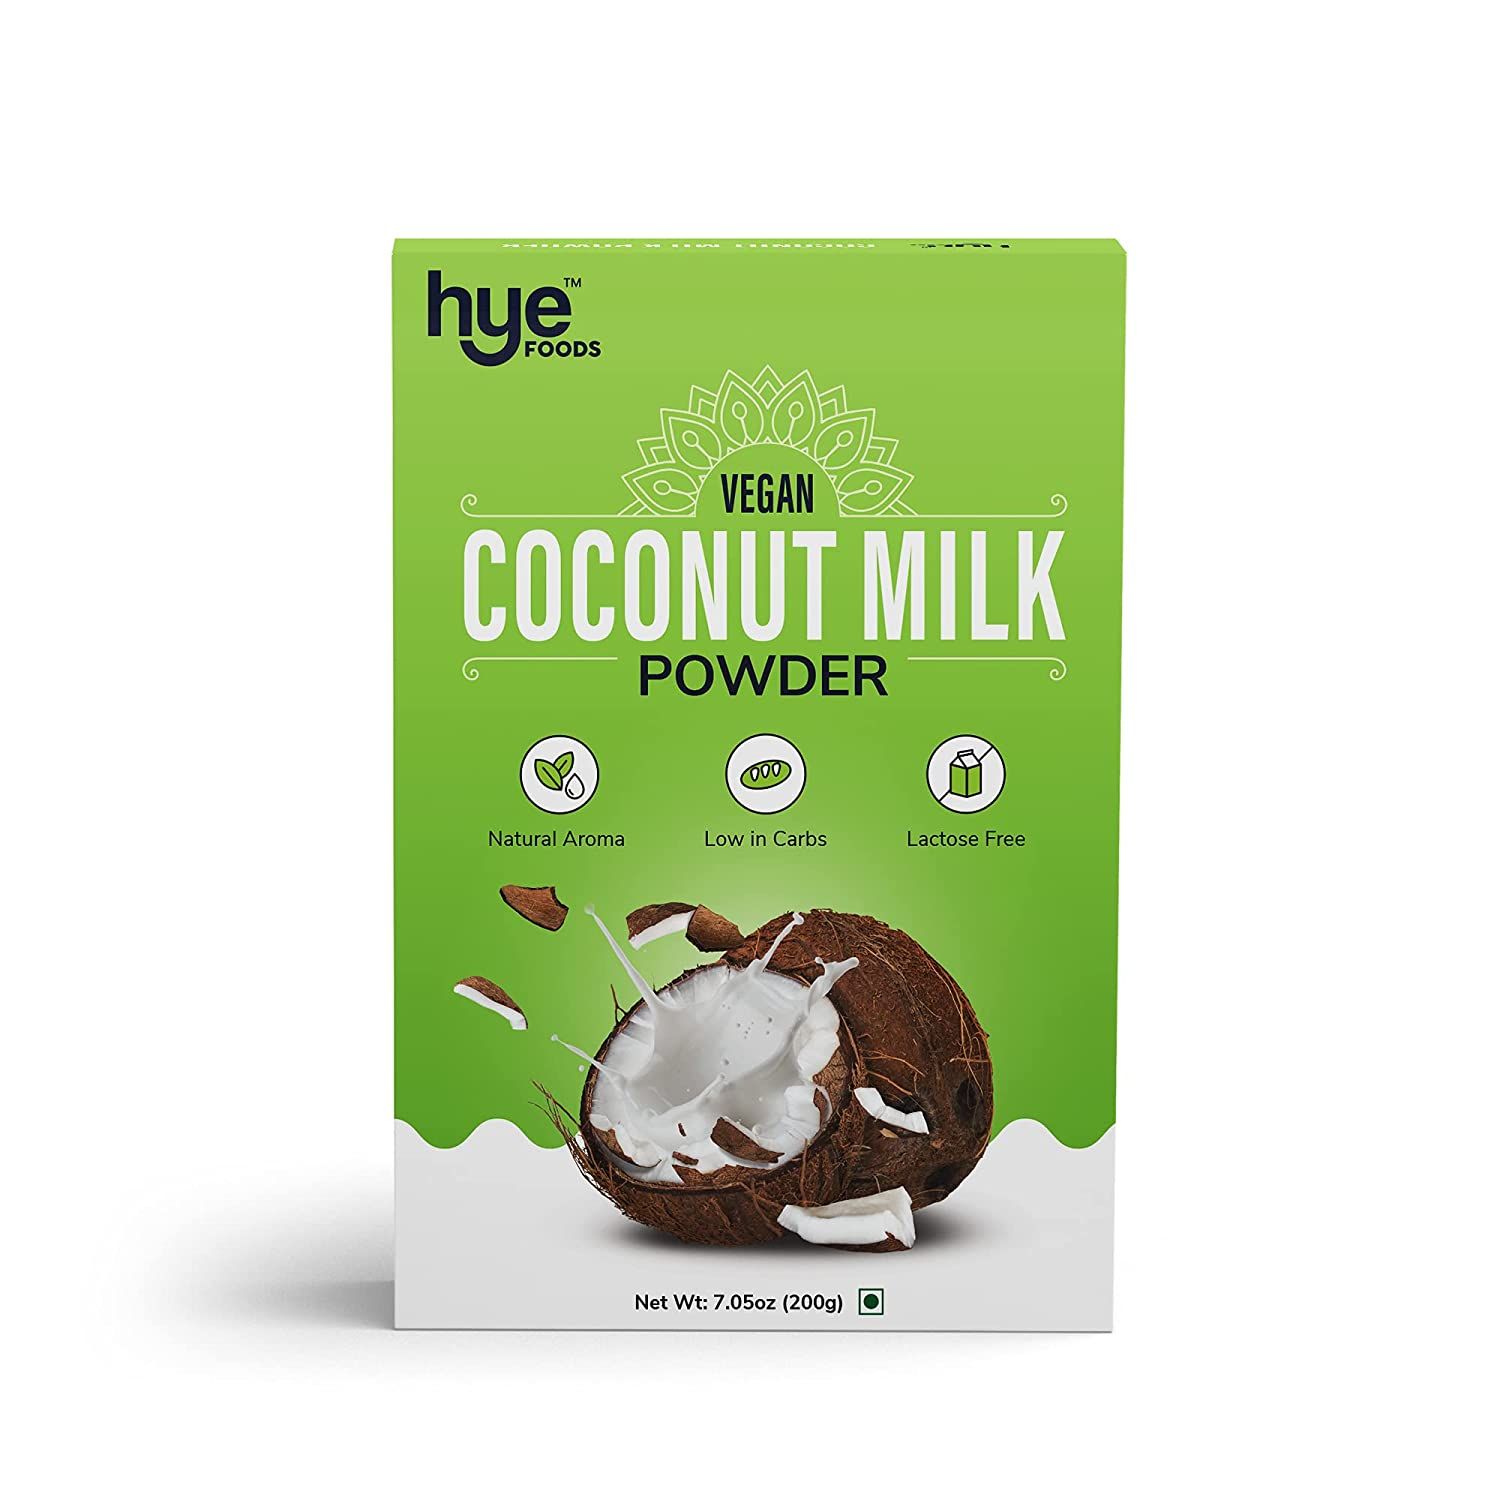 Hey Foods Vegan Coconut Milk Powder Image